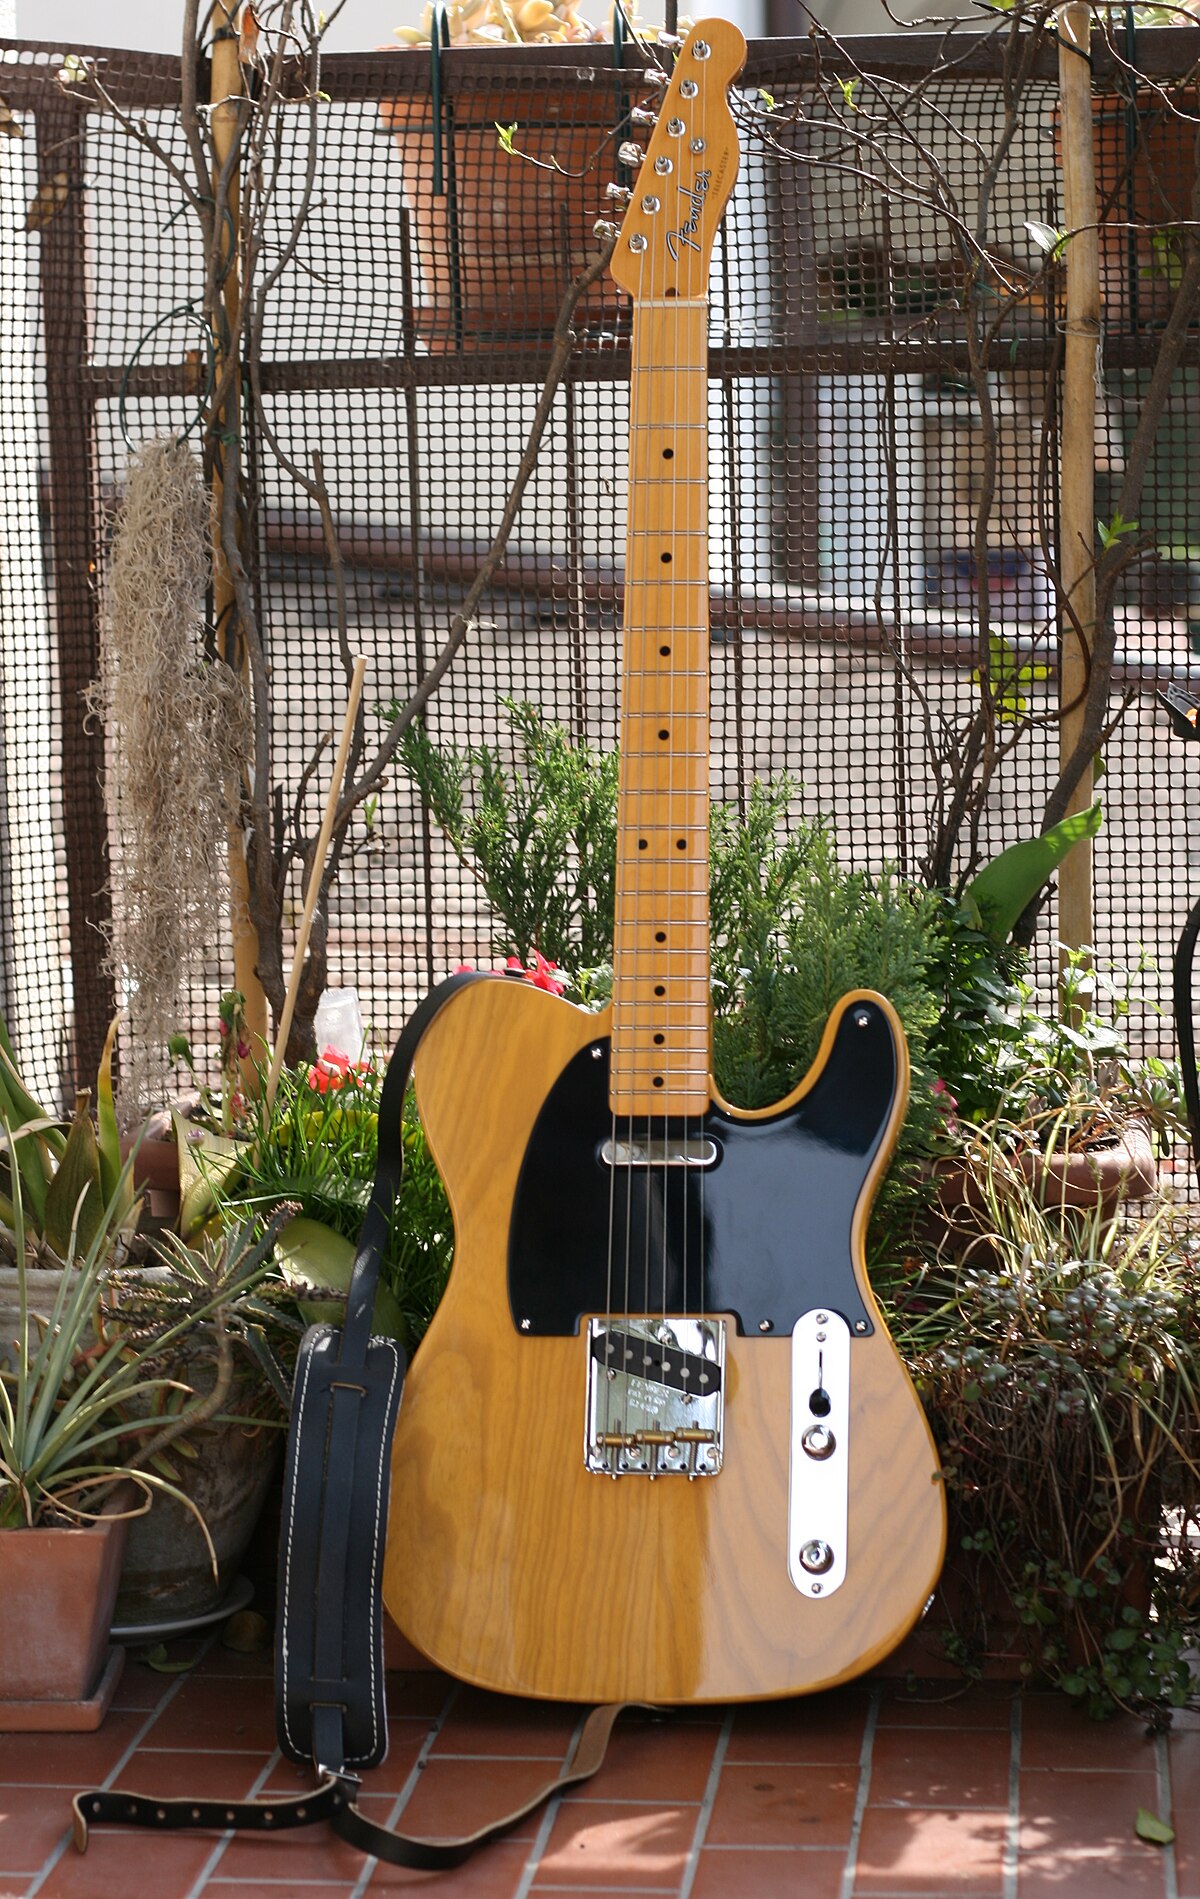 No haga eficacia Presa File:Fender Telecaster American Vintage 52.JPG - Wikimedia Commons